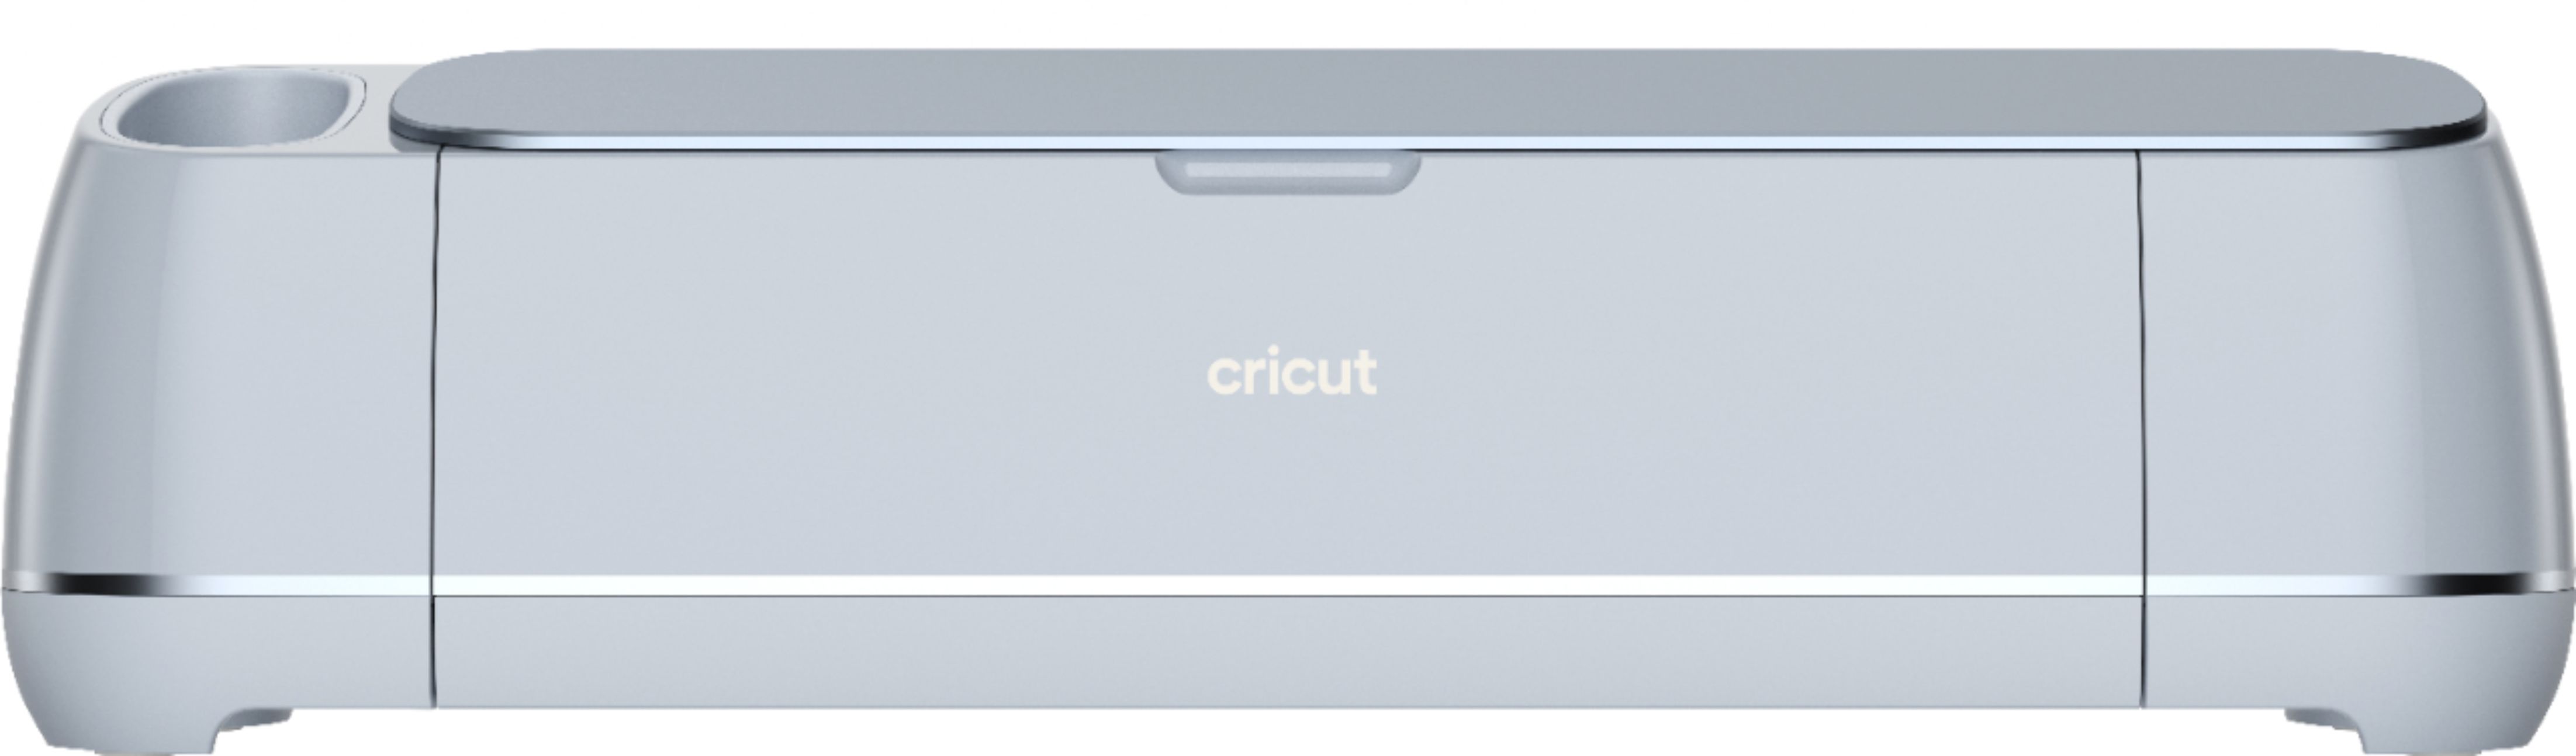 Cricut Maker 3 Ultimate Smart Cutting Machine with Adaptive Tool